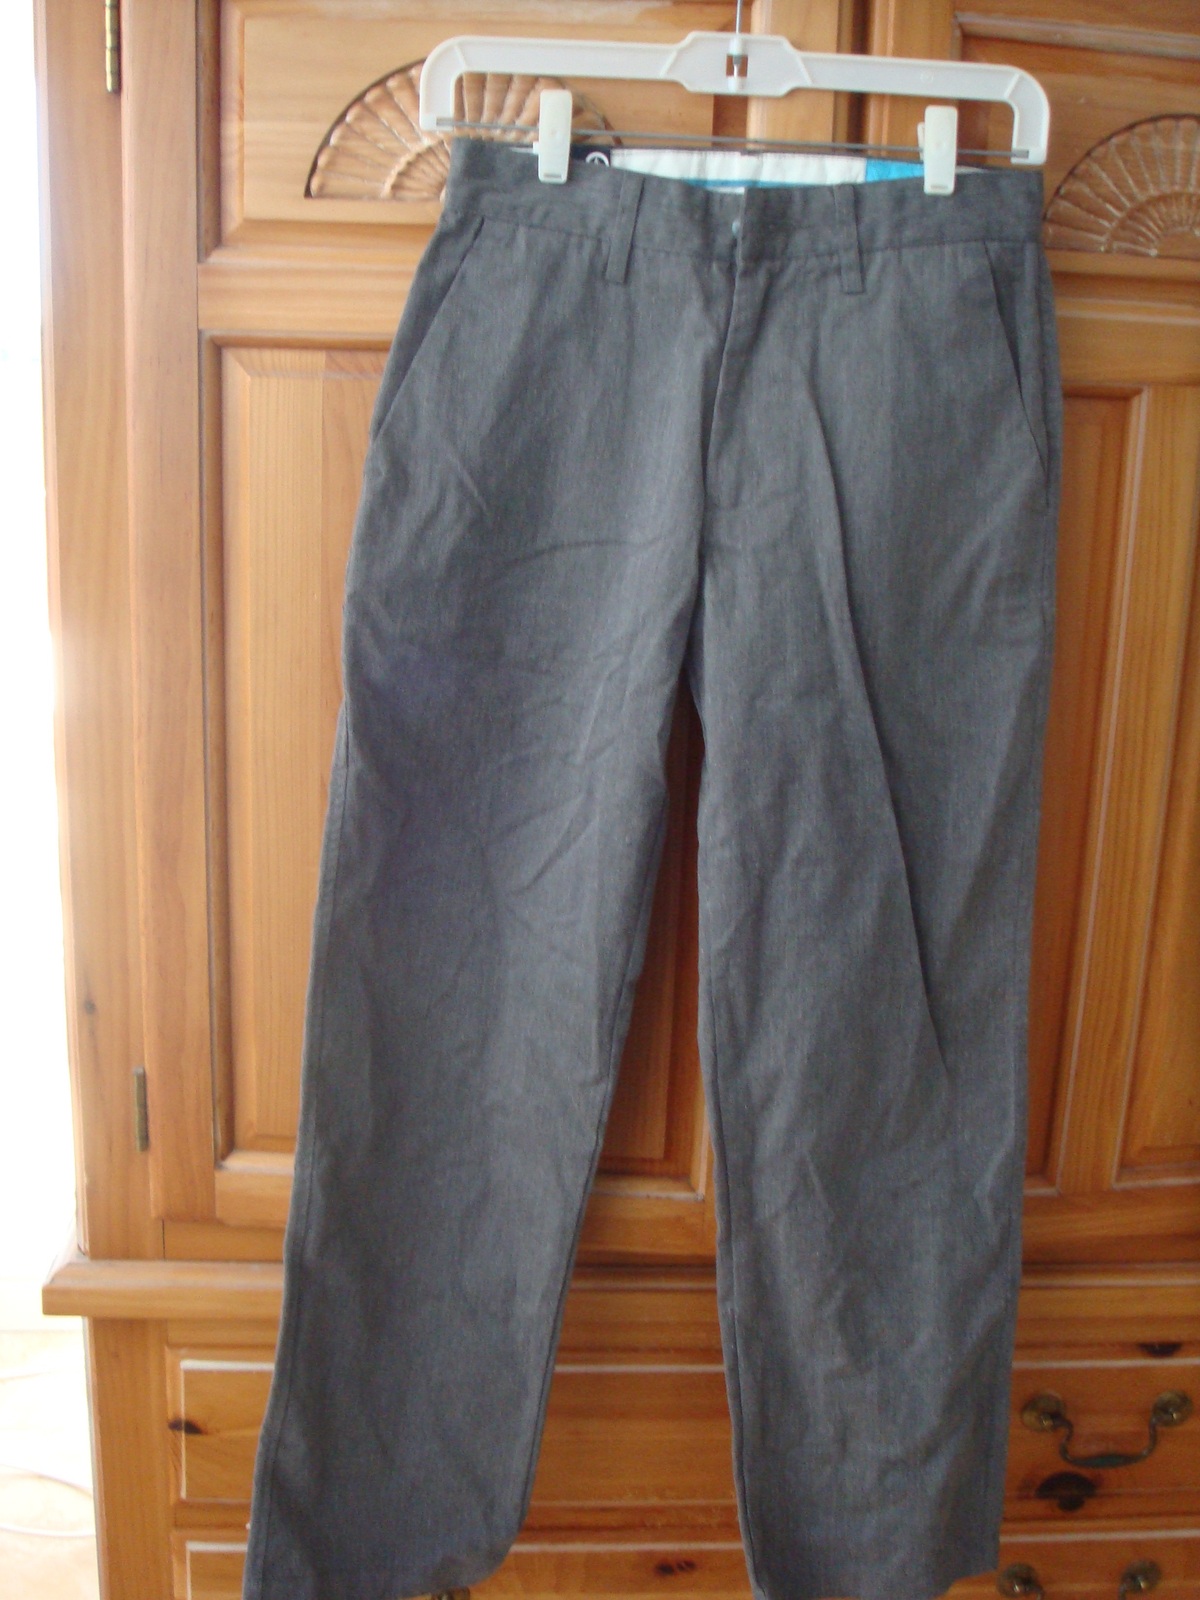 50% off mfr retail price Boys Grey Pants by Volcom size 26 - $24.99